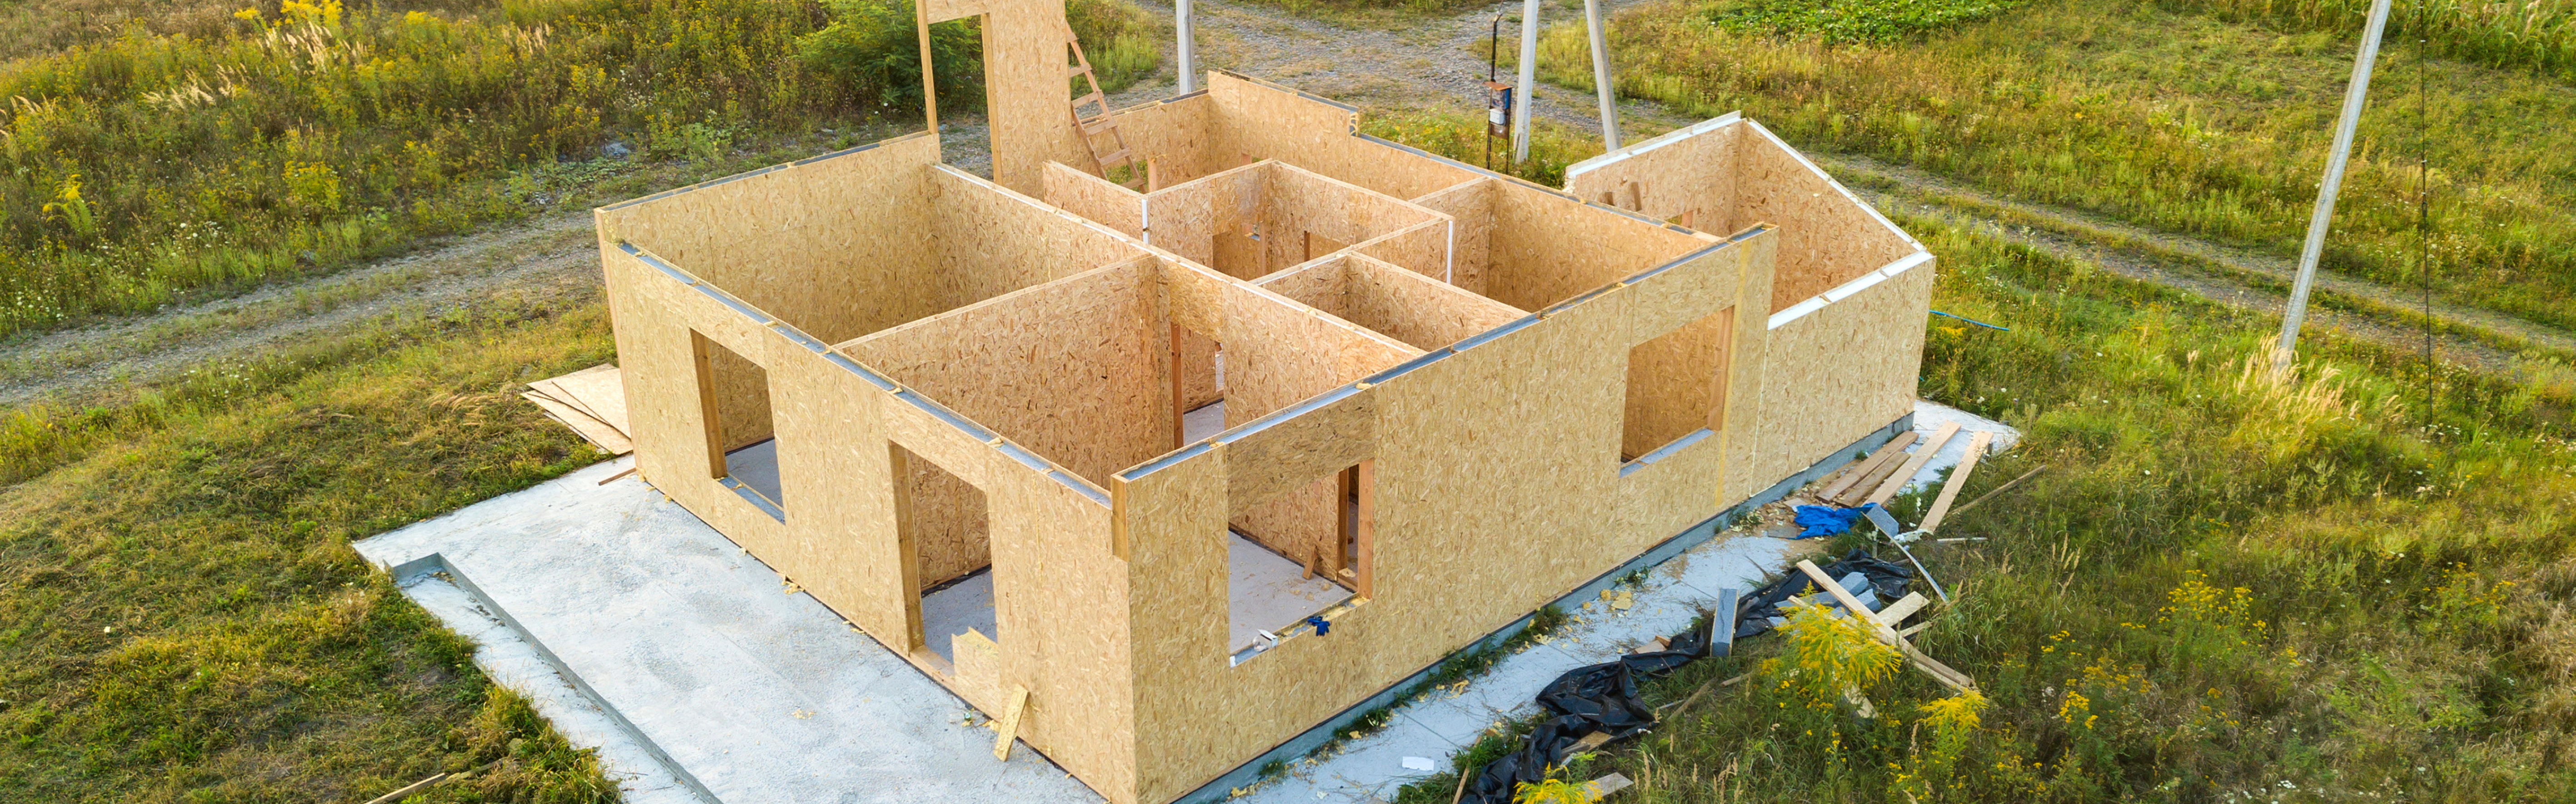 Arquimes Arquitectura_caldes de montbui casas modulares